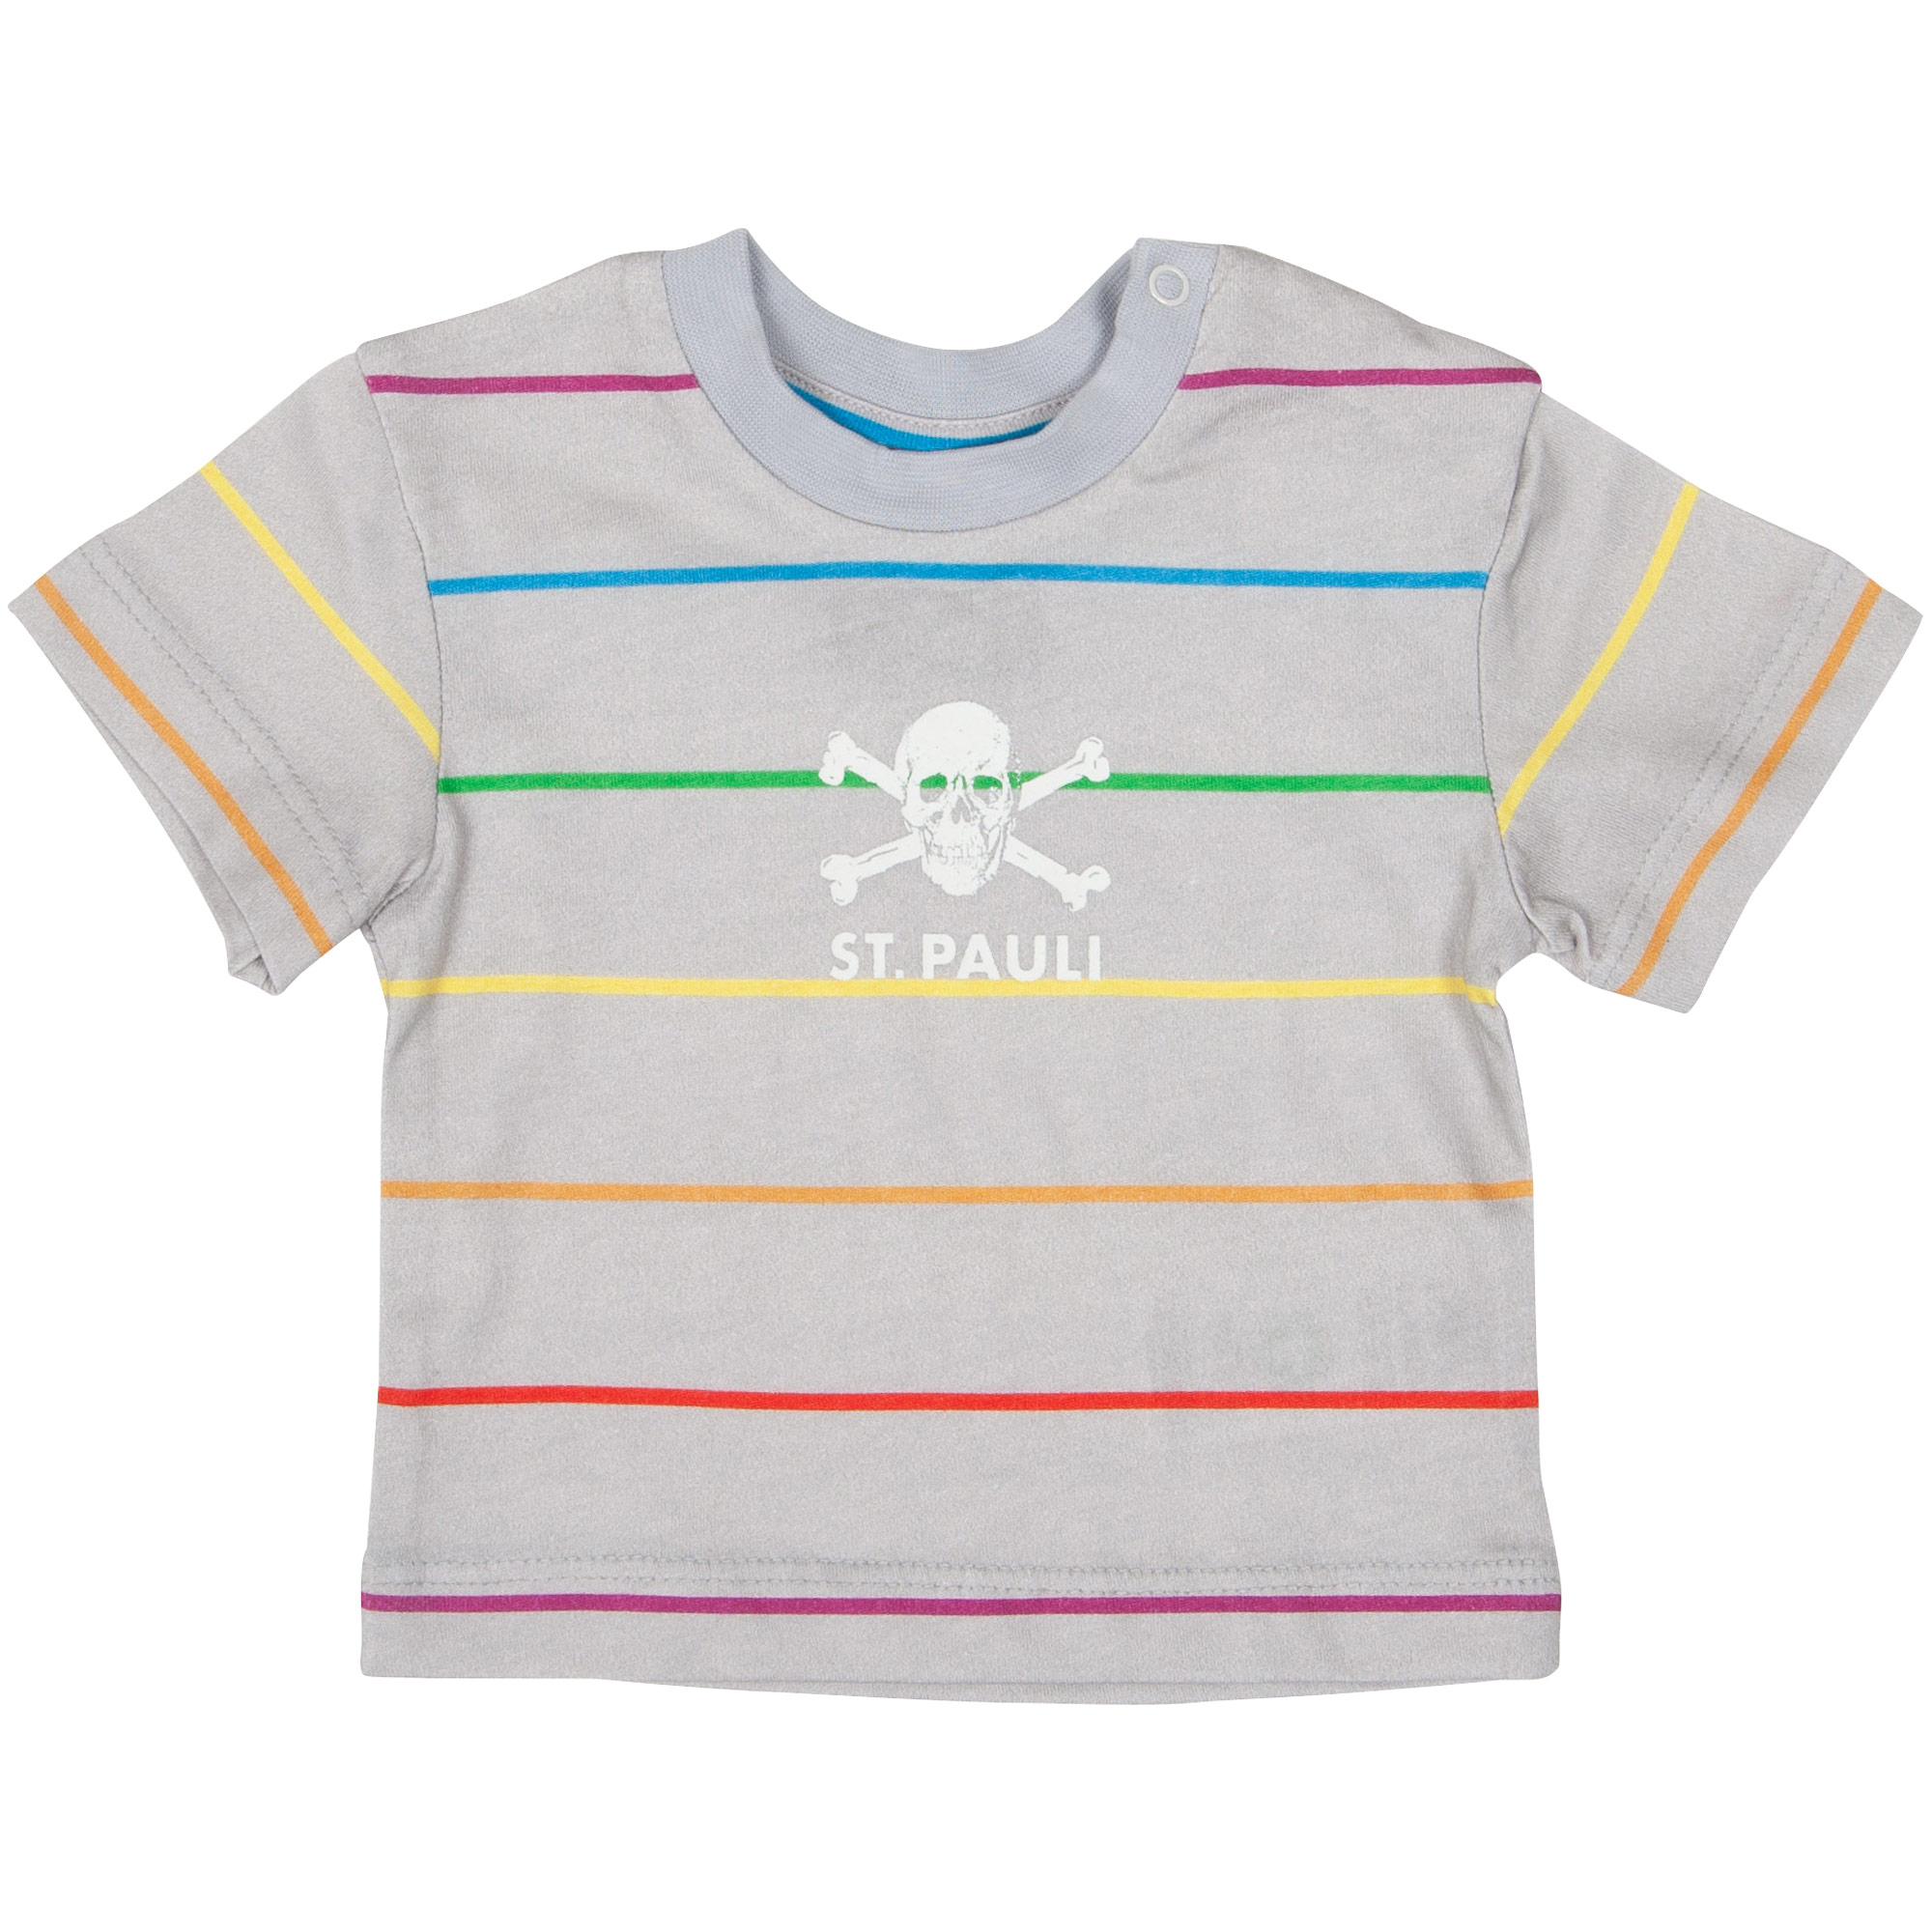 FC St. Pauli - Baby T-Shirt Regenbogen Streifen - grau